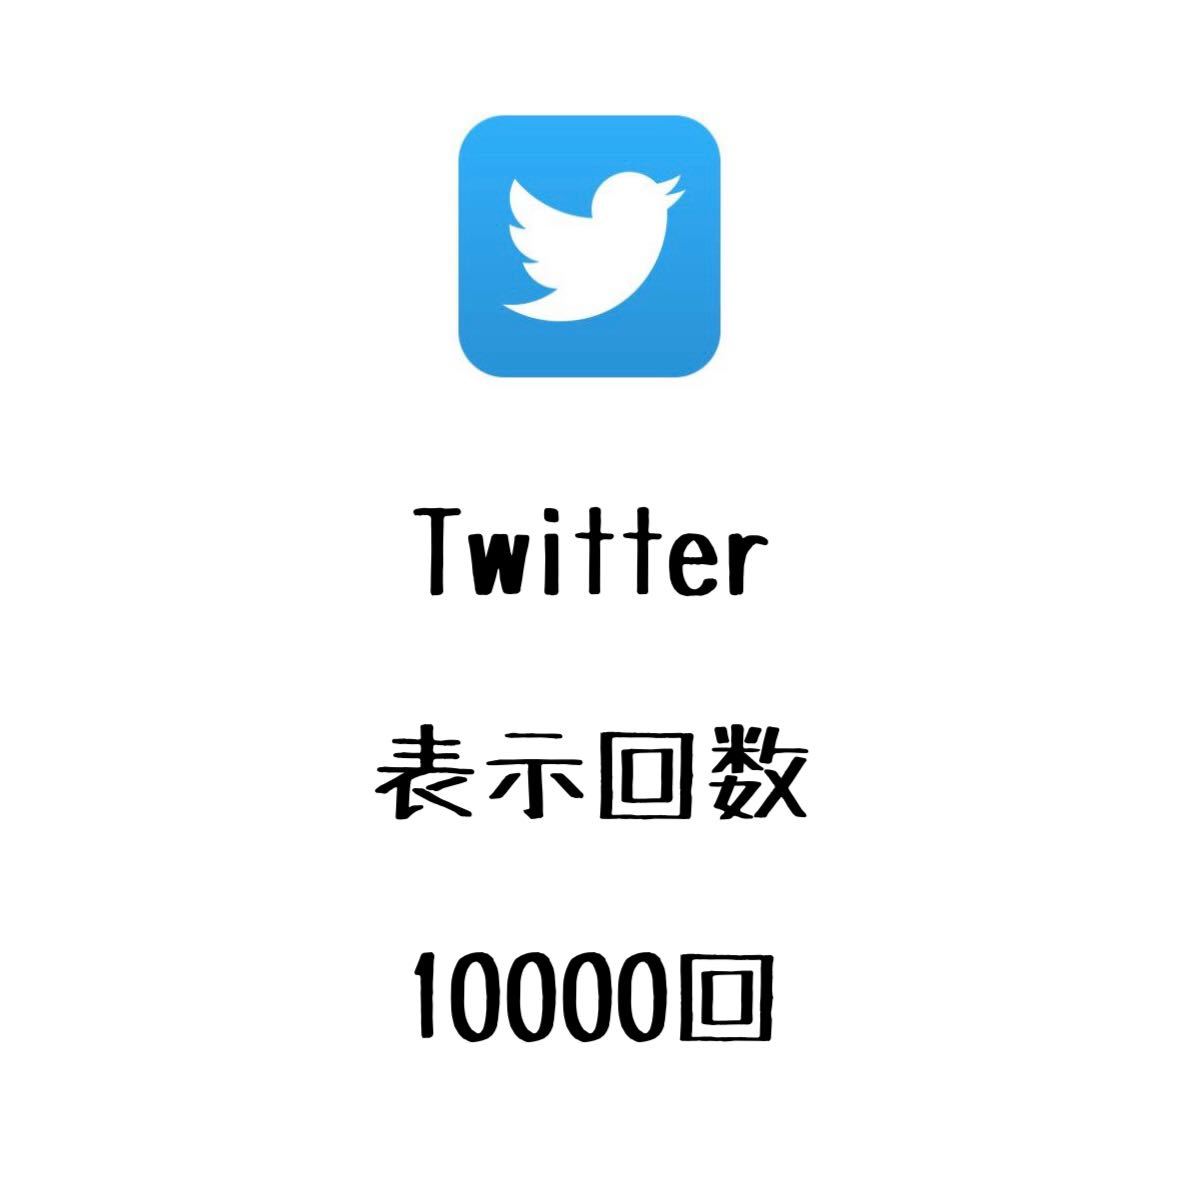 X Twitter ツイッター 表示回数 10000回